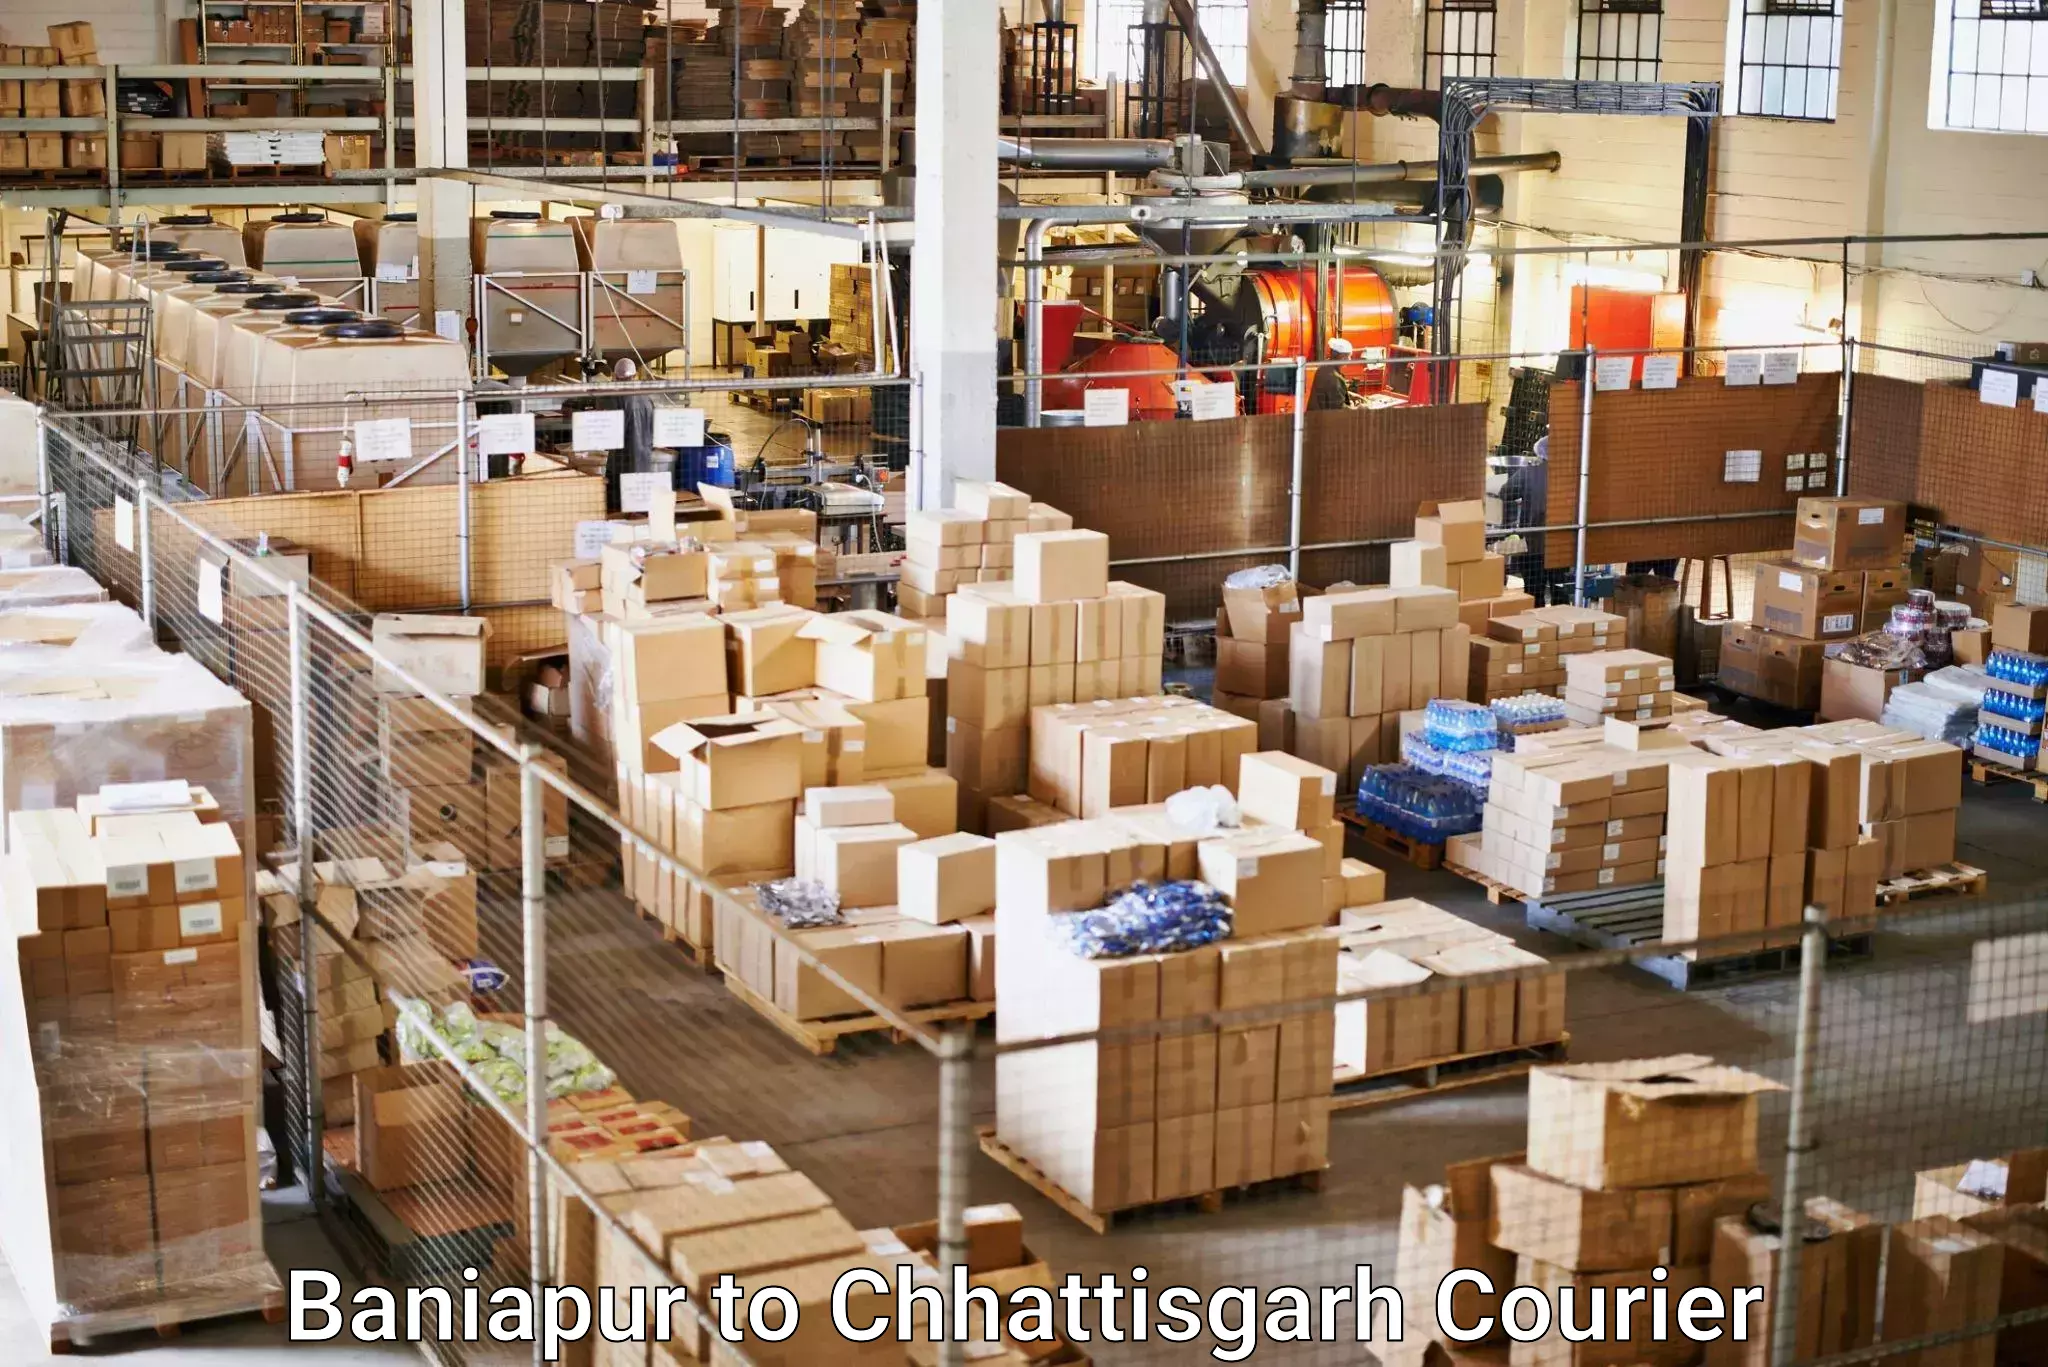 Courier service booking Baniapur to Chhattisgarh